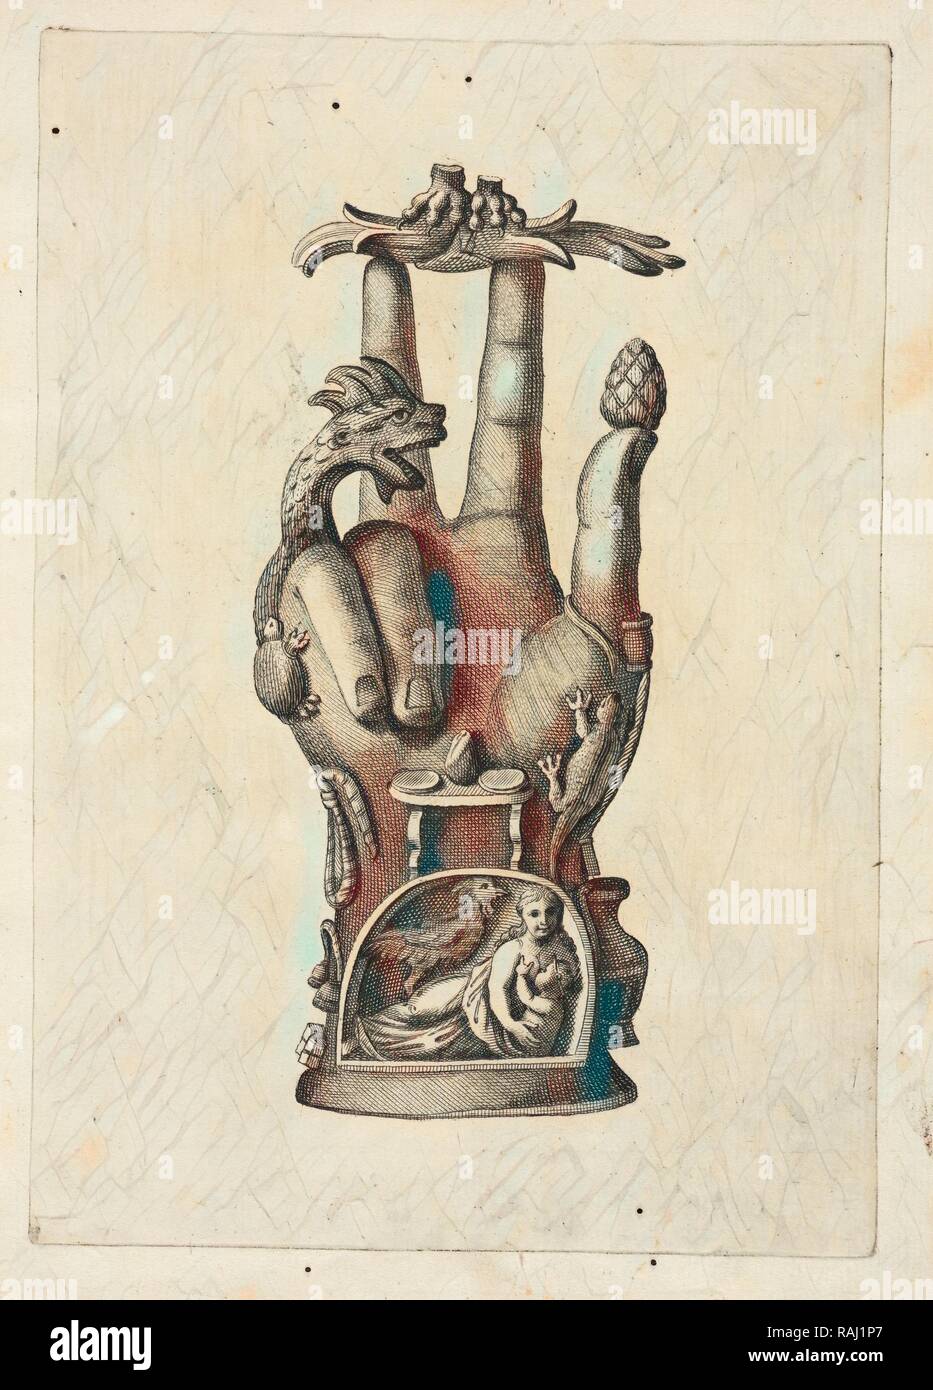 Mano di bronzo, detta Pantea, Alcuni monumenti del Museo Carrafa, Daniele, Francesco, 1740-1812, Engraving, etching reimagined Stock Photo